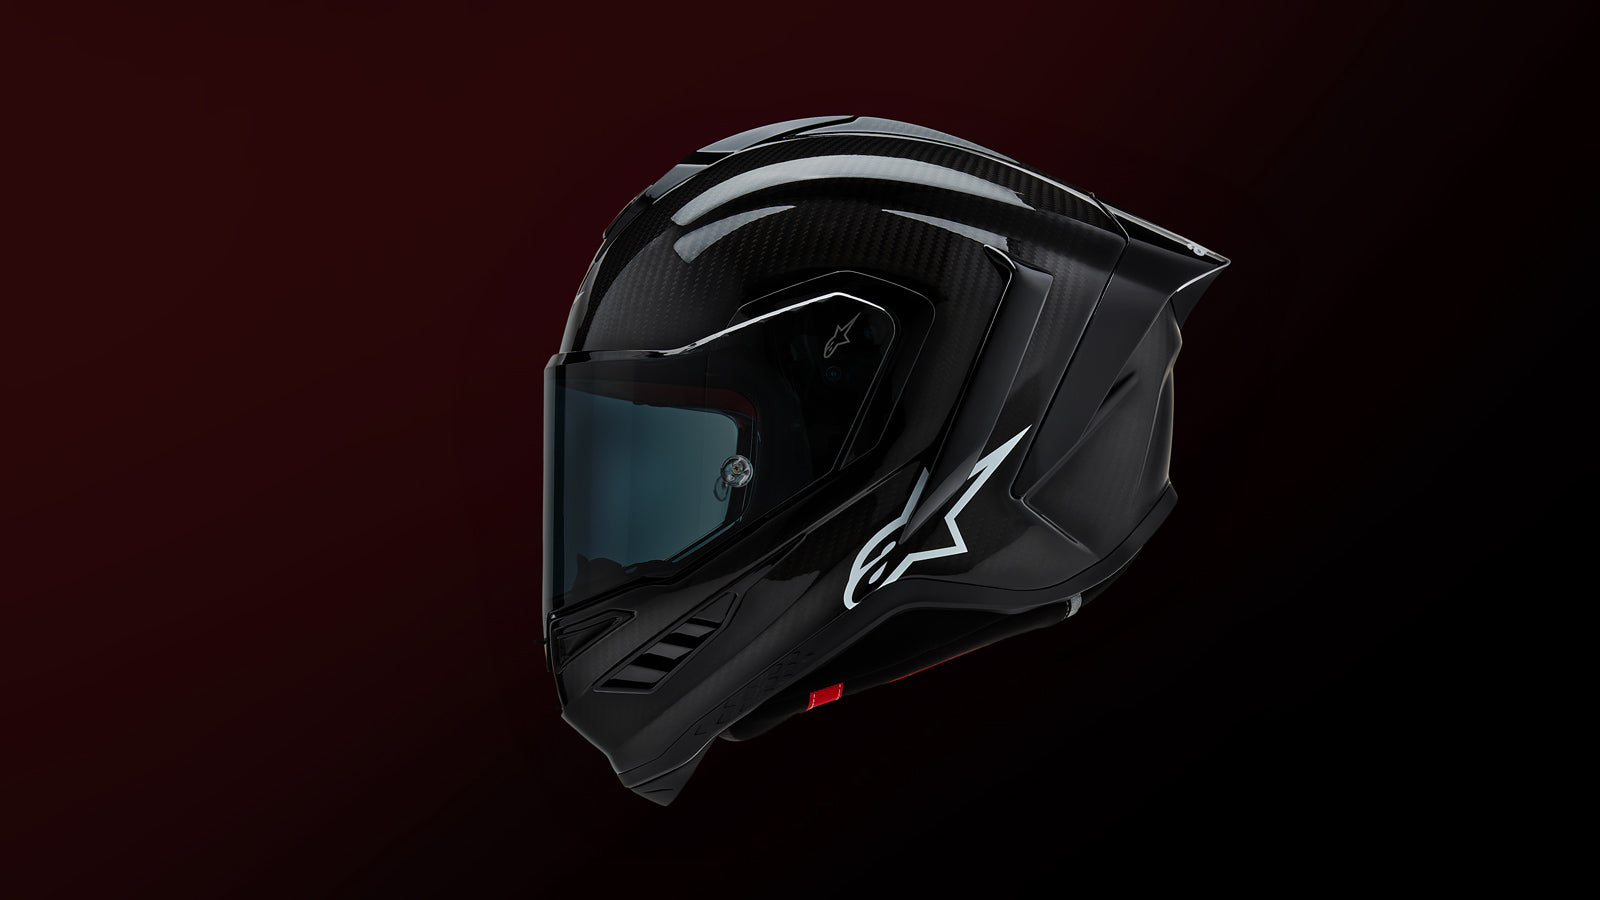 Alpinestars Presents Its All-New Supertech R10 Road Racing Helmet